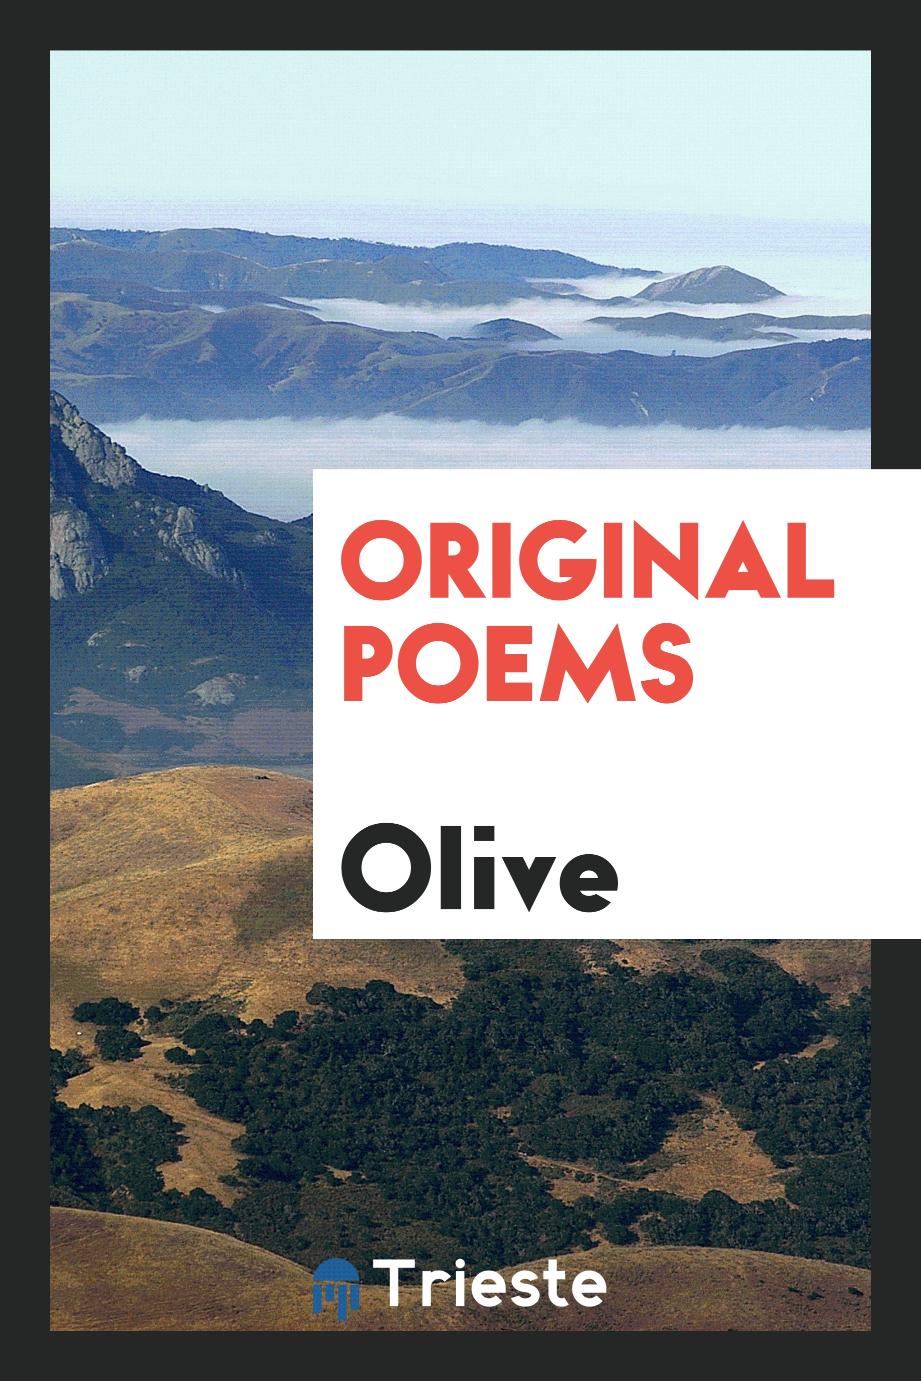 Original poems